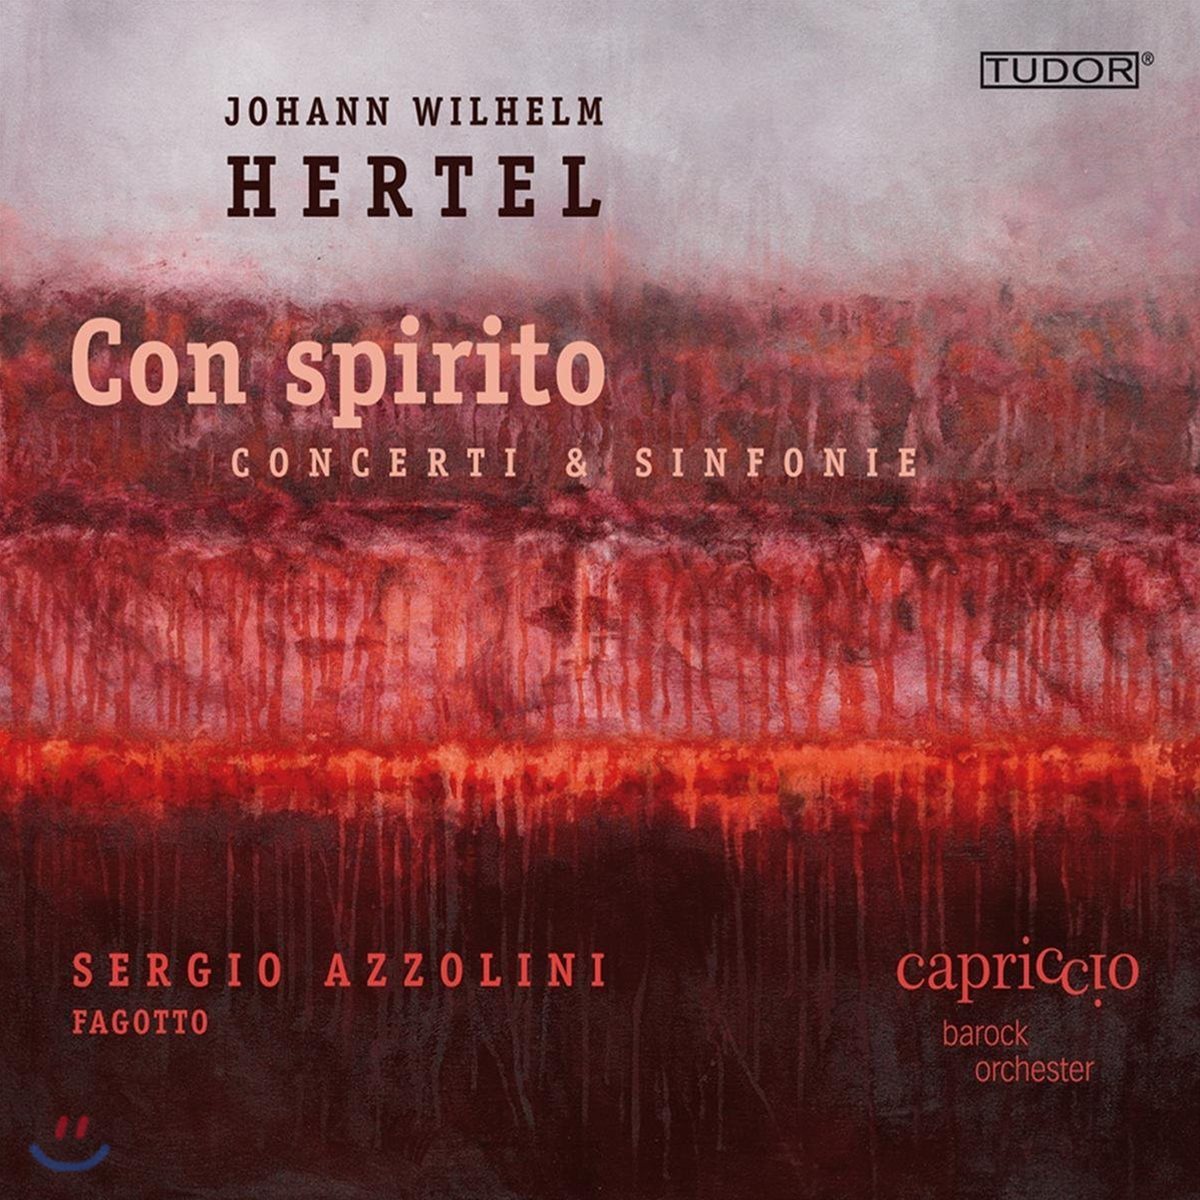 Capriccio Barockorchester 요한 빌헬름 헤르텔: 바순 협주곡, 신포니아 (Con Spirito - Johann Wilhelm Hertel: Bassoon Concerto)